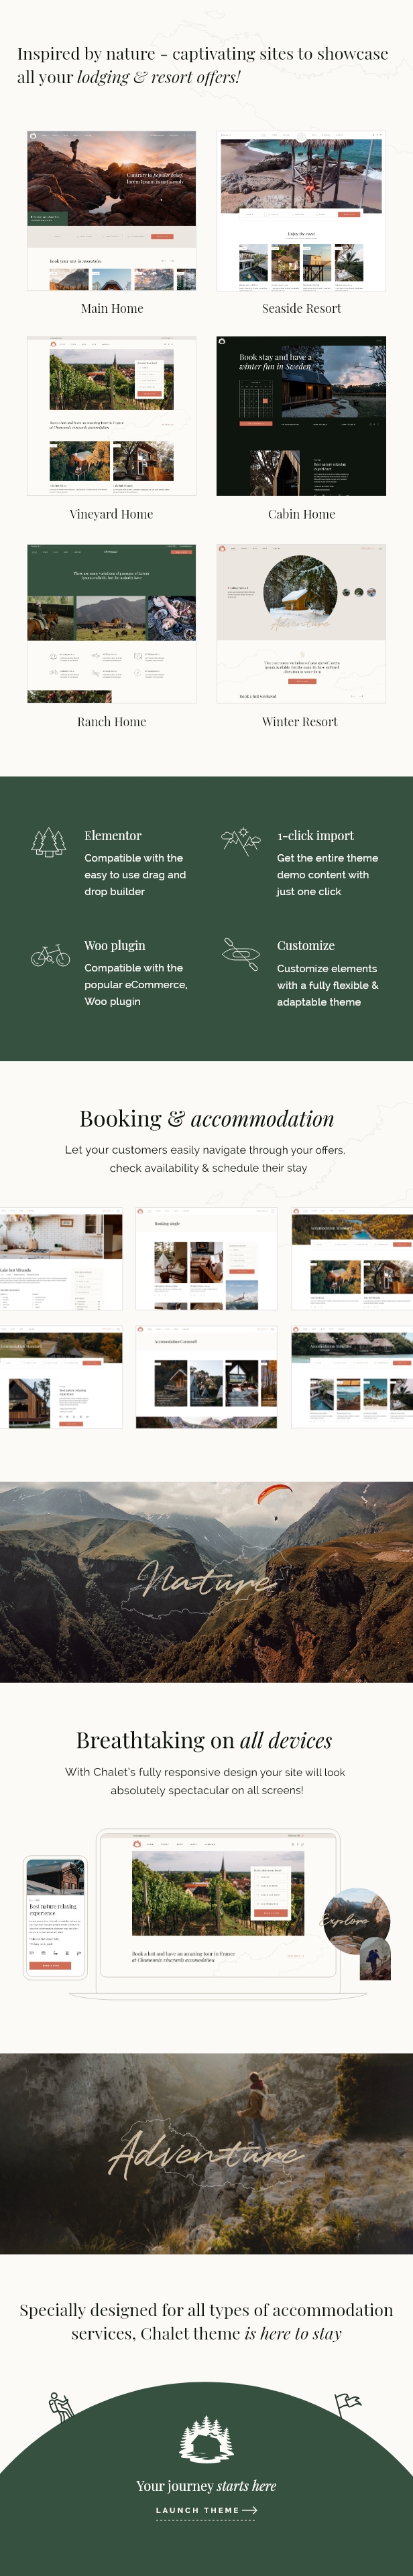 Chalet - Travel Accommodation Booking WordPress Theme - 2